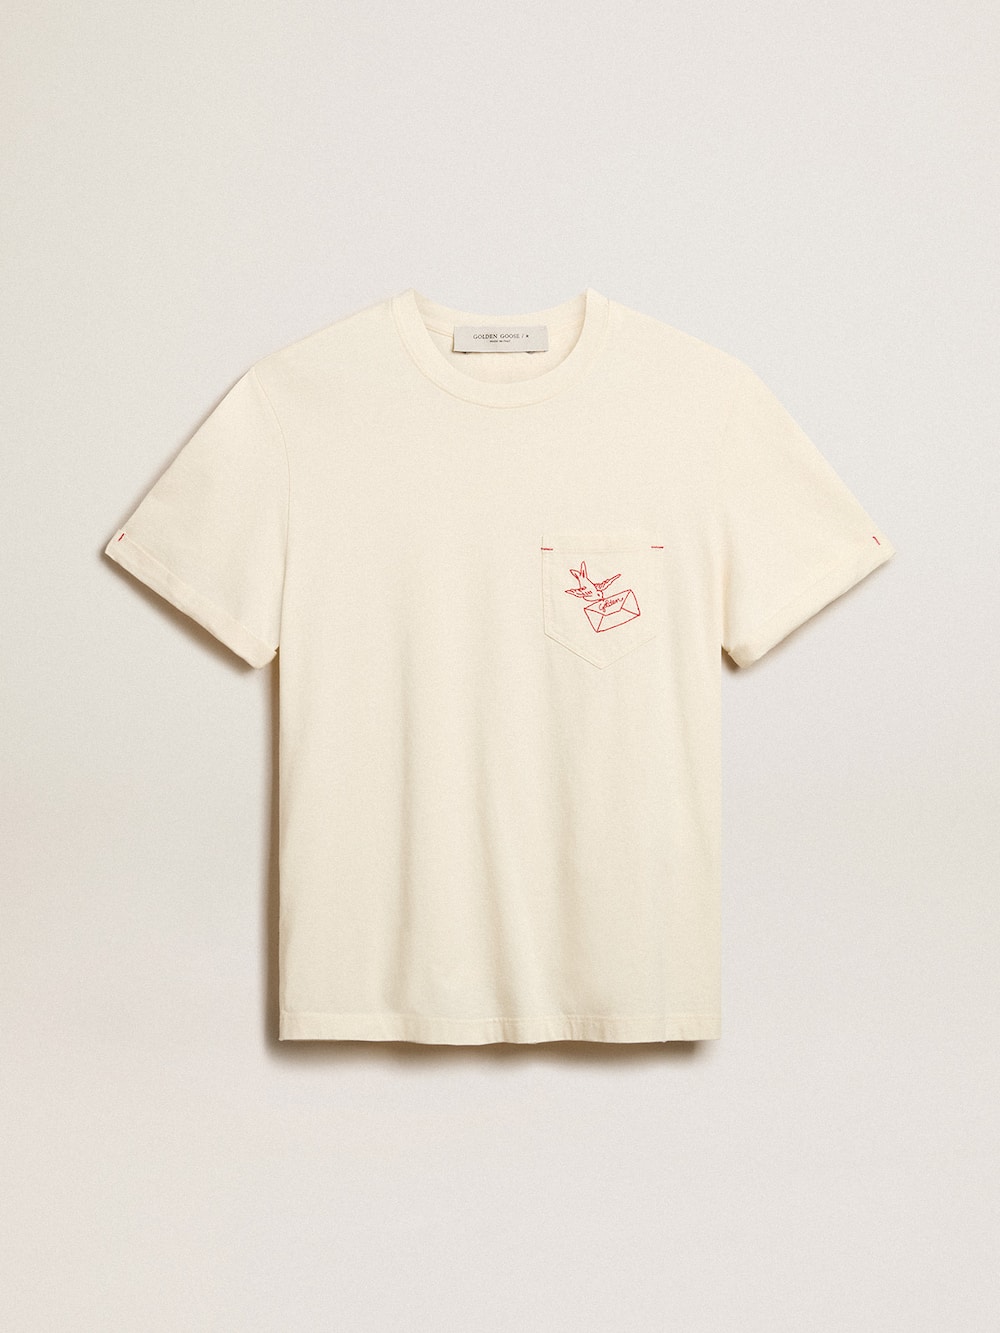 Golden Goose - T-Shirt da uomo in cotone color bianco vissuto e con tasca ricamata in 